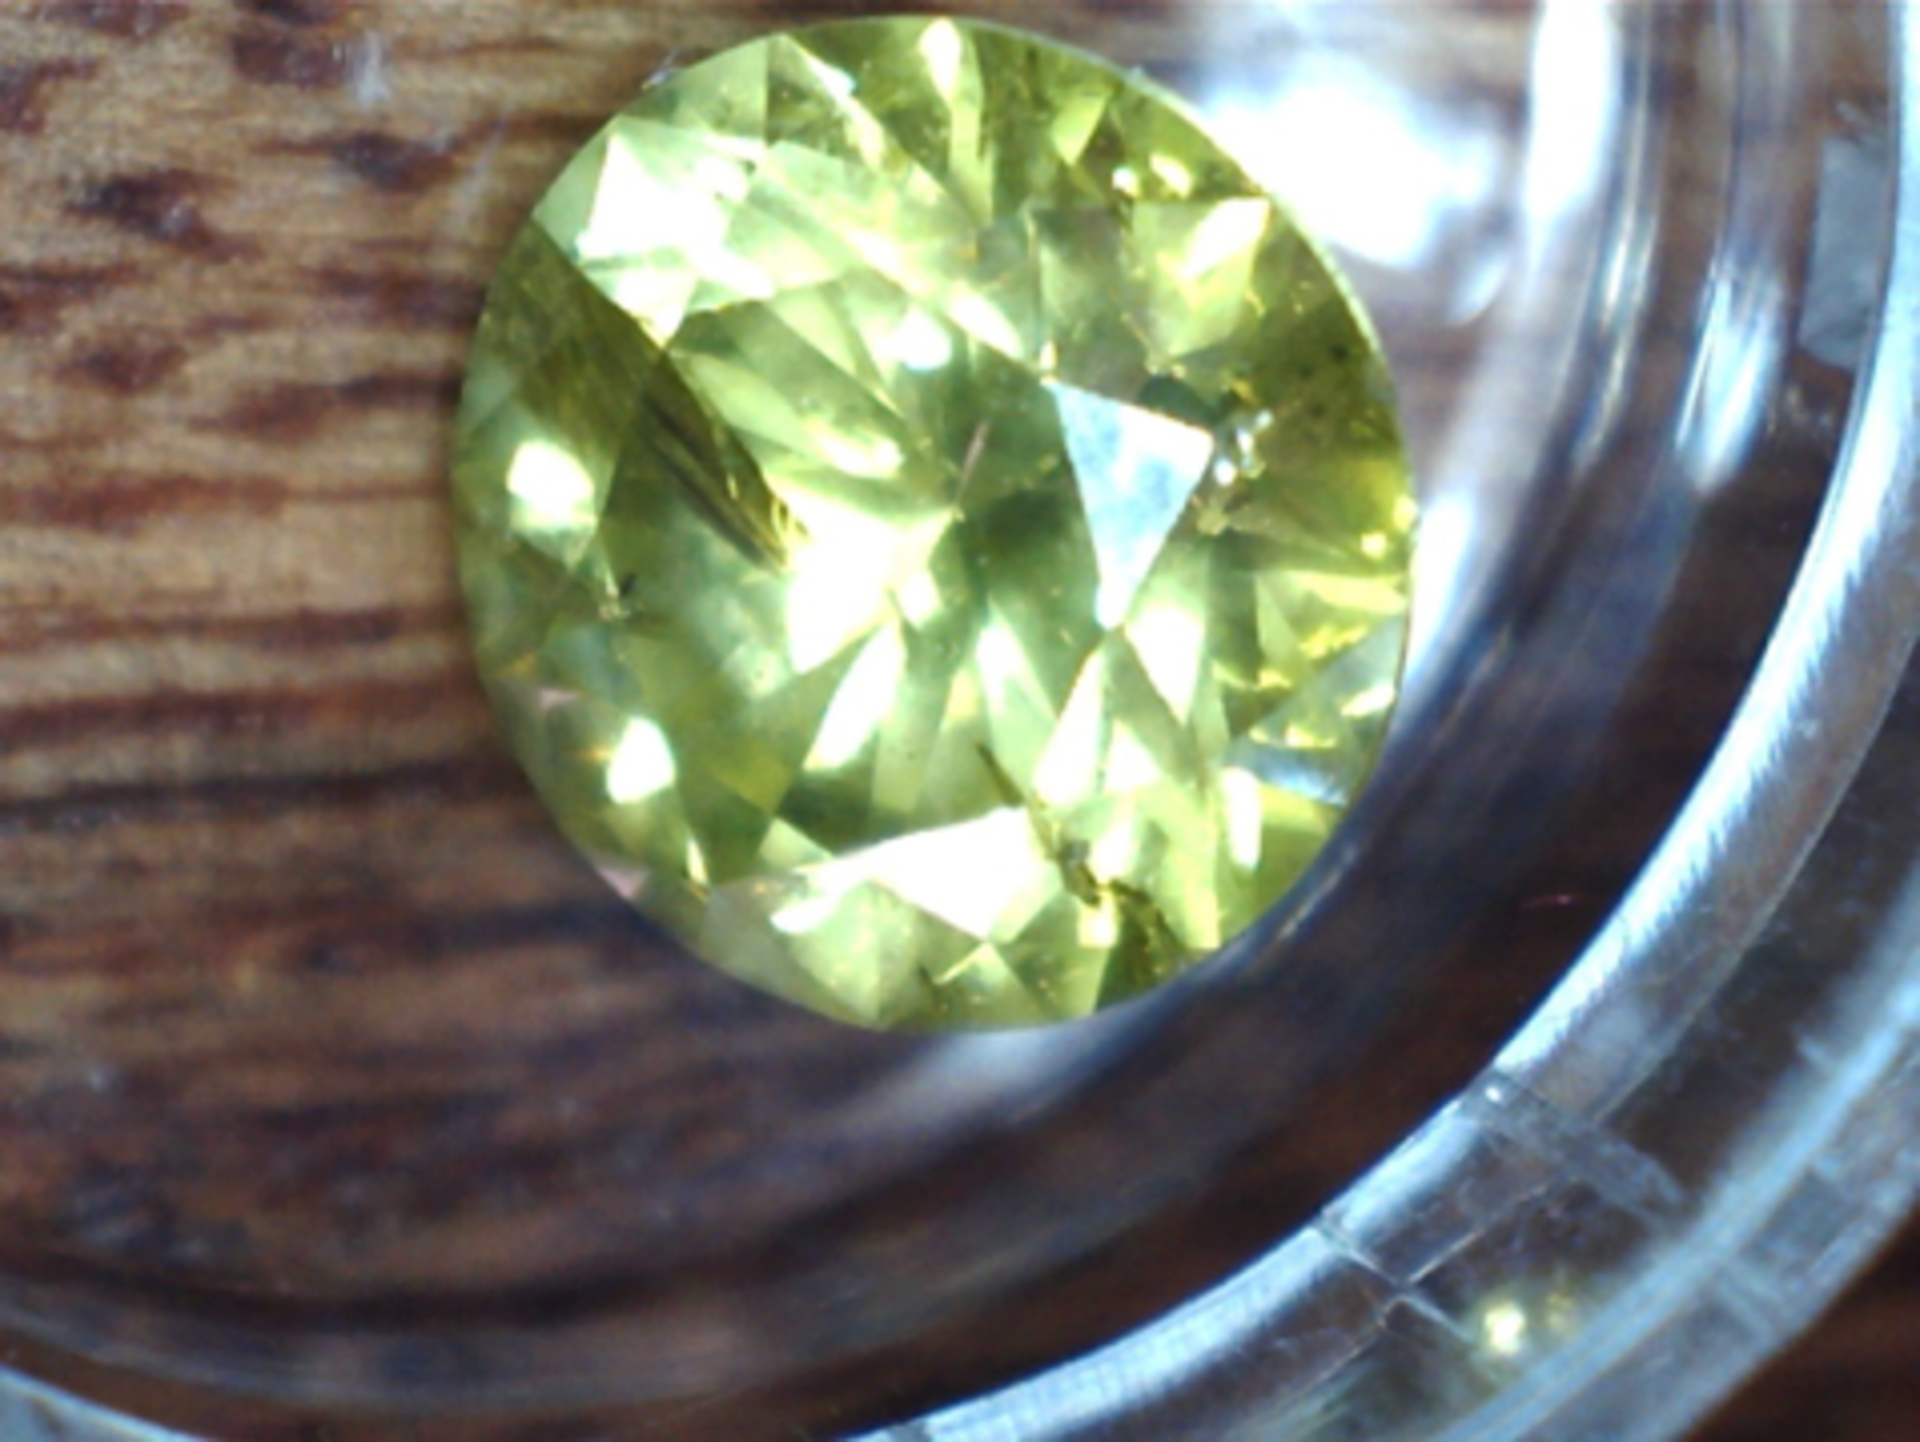 1.54 carat Round yellow diamond